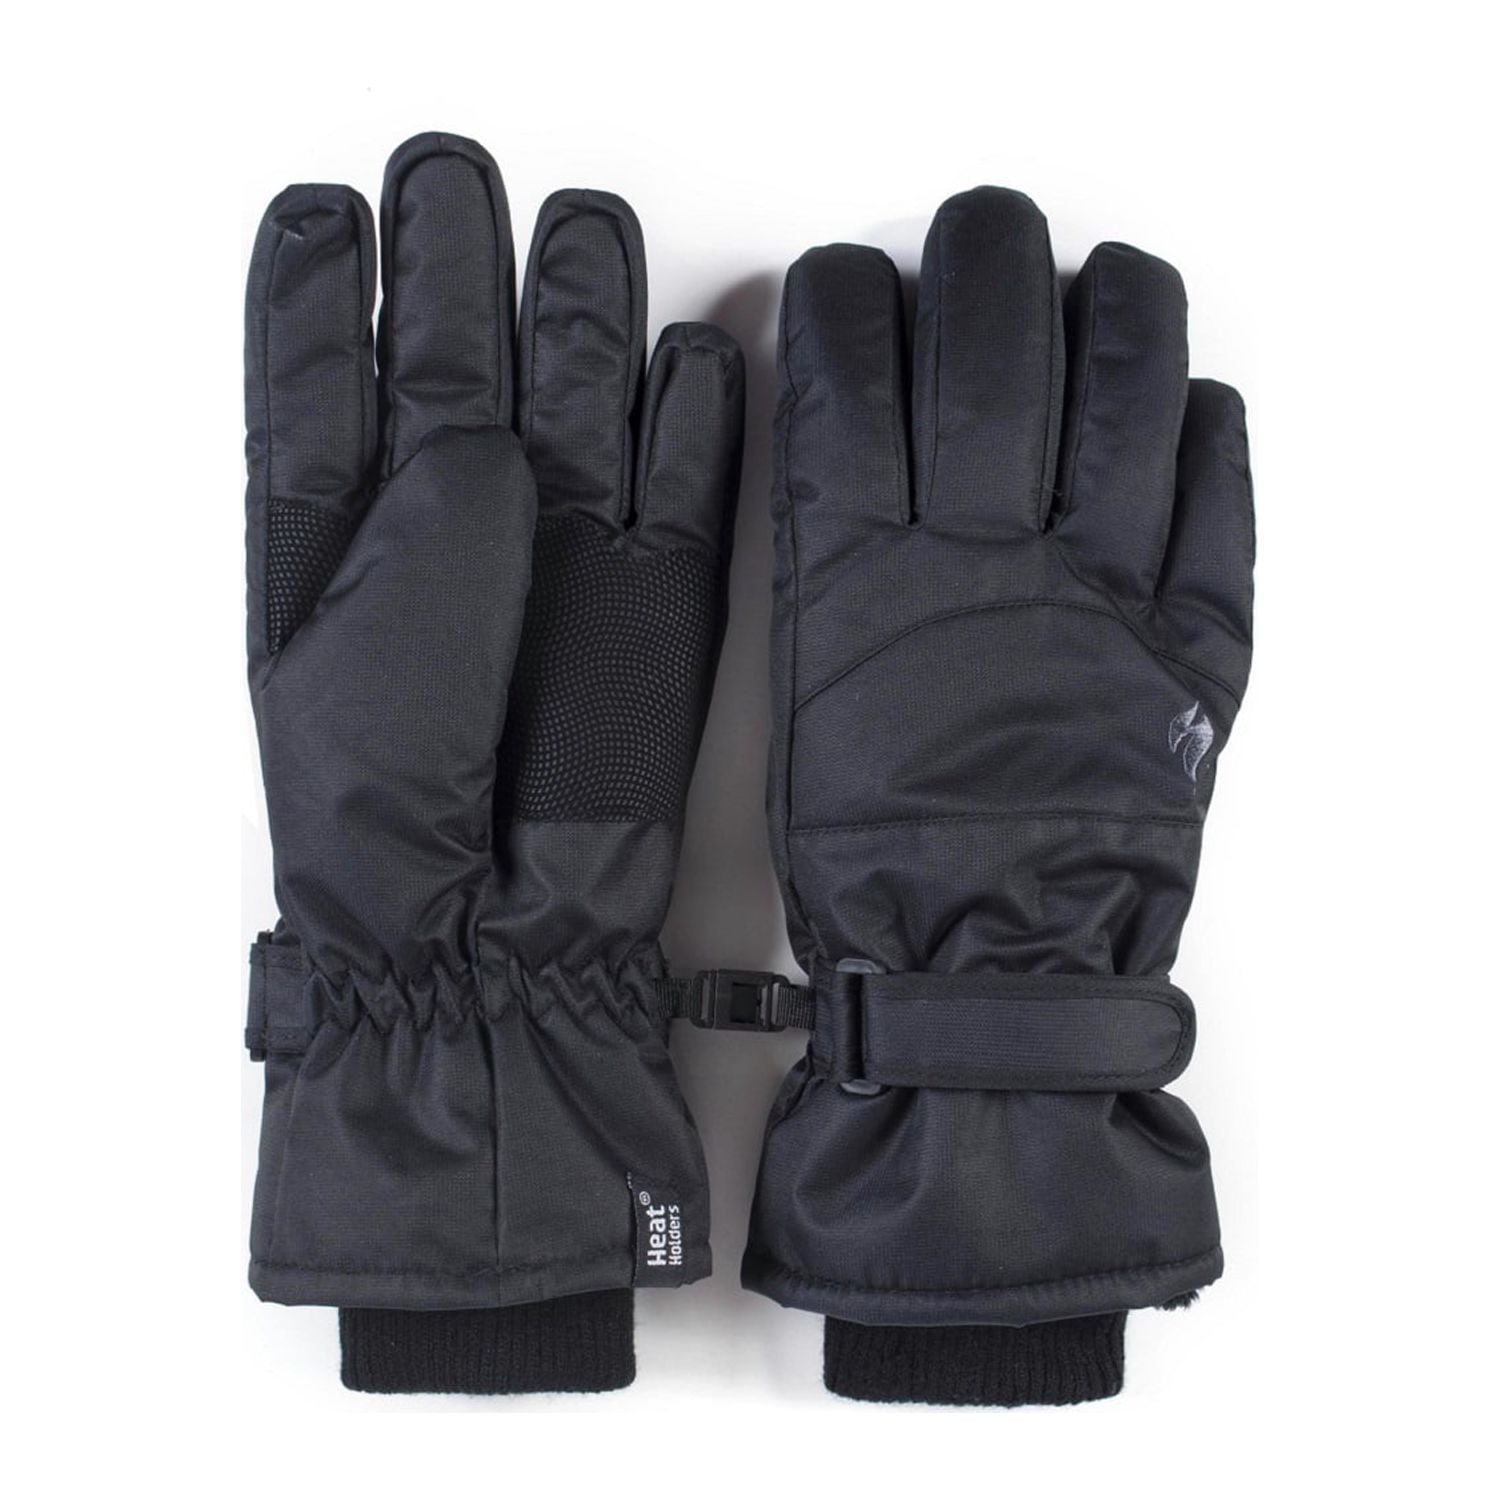 Heat Holder Performance Gloves Ladies - Black - M/L - Walmart.com